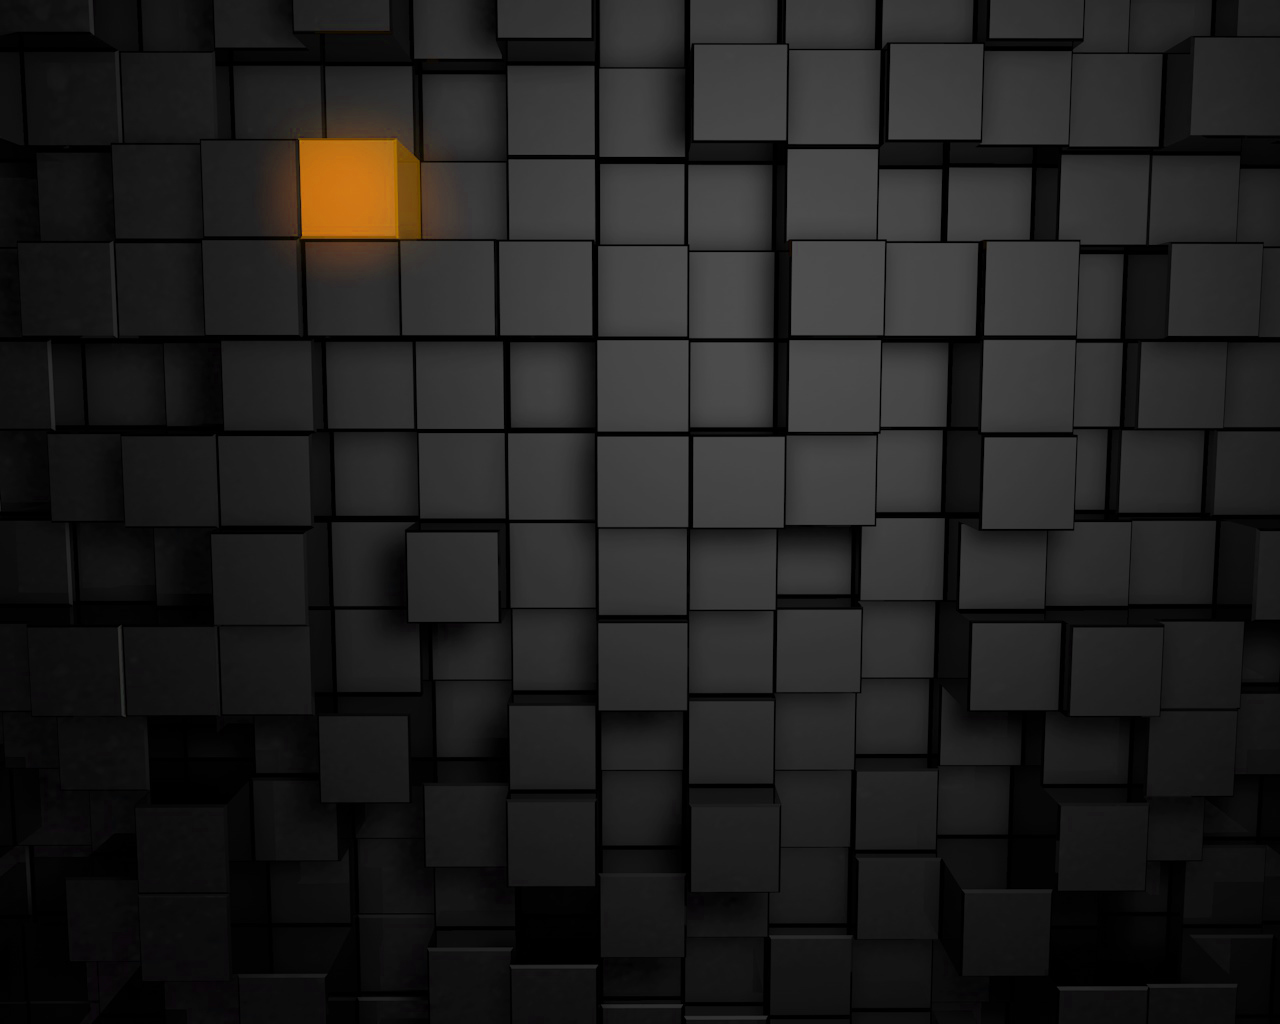  Orange Cube Wallpaper by nidoyam on DeviantArt